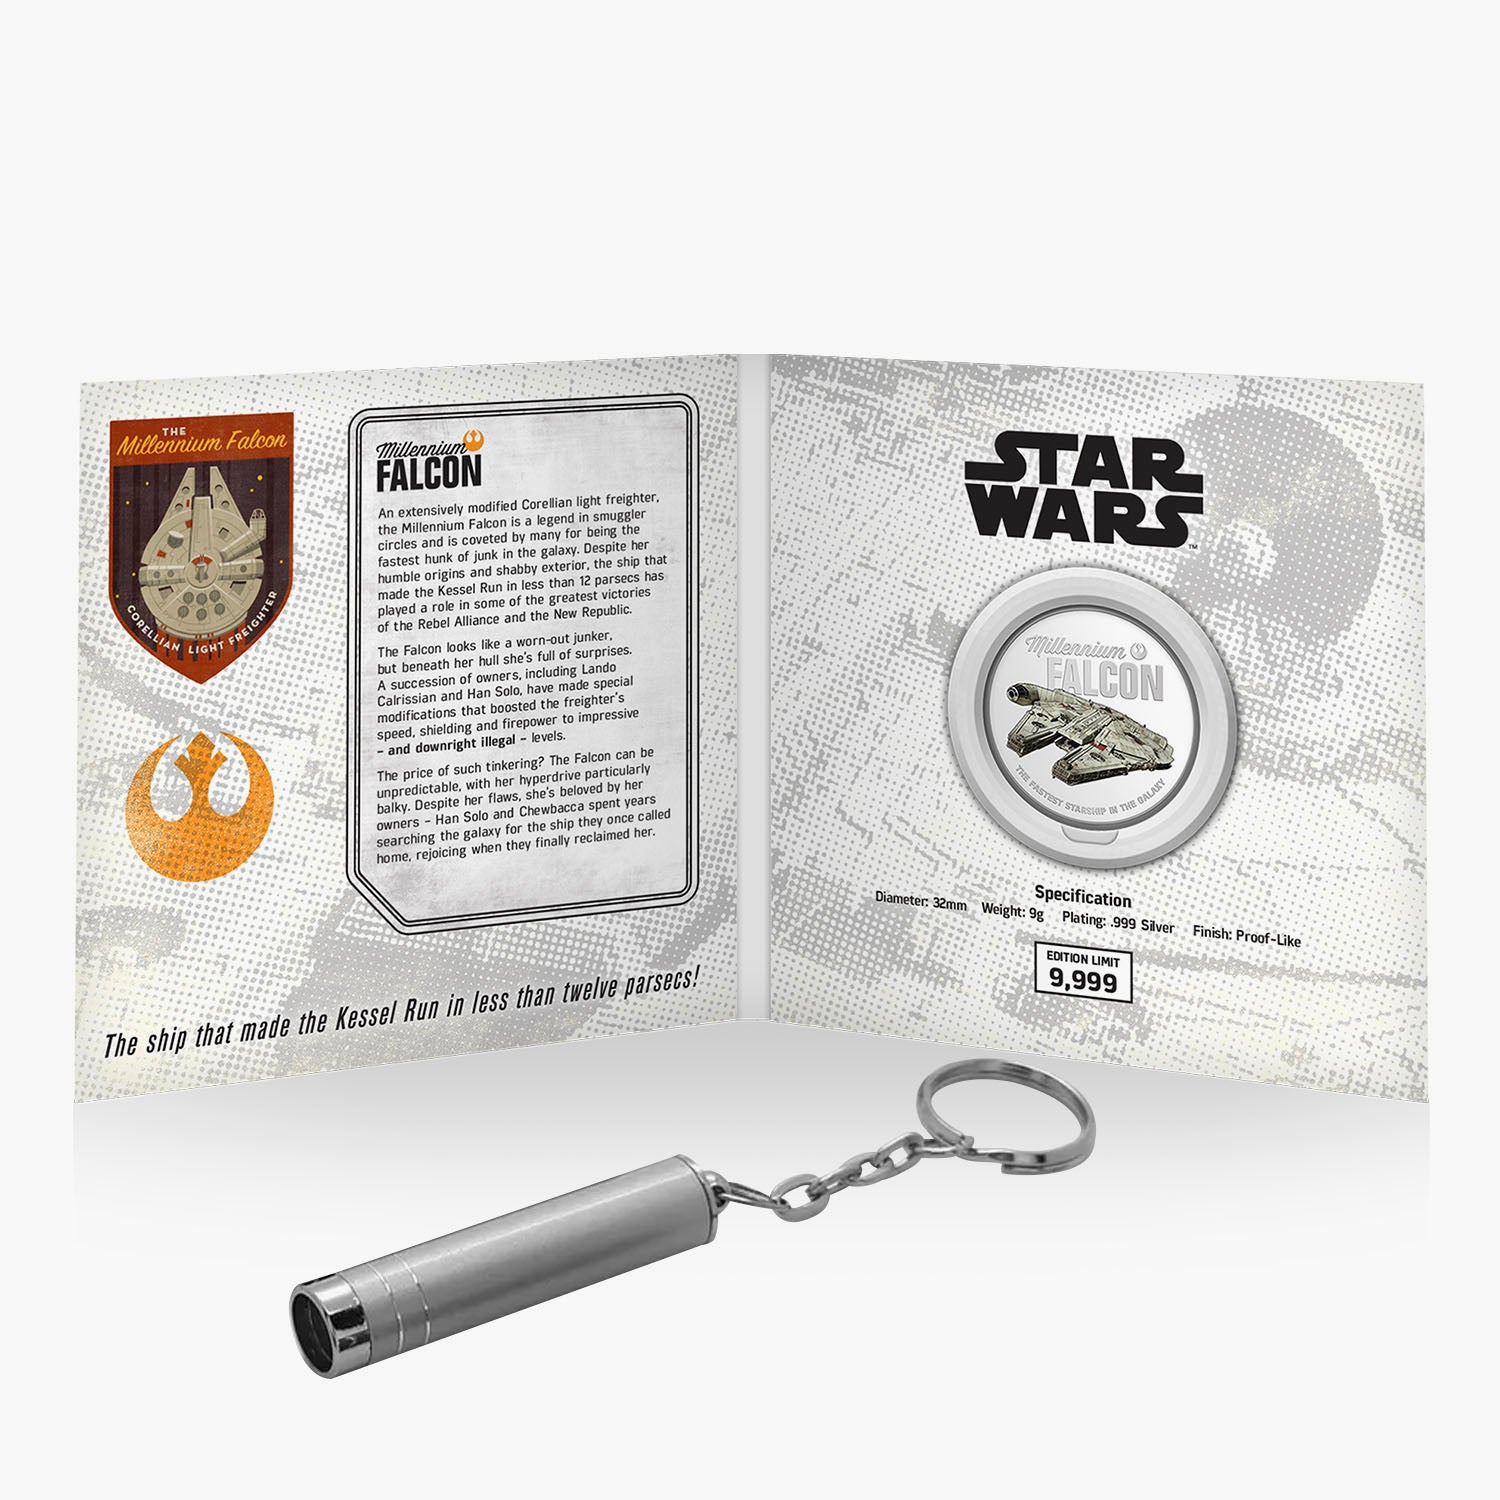 The Hidden Secret Official Star Wars Millennium Falcon Commemorative